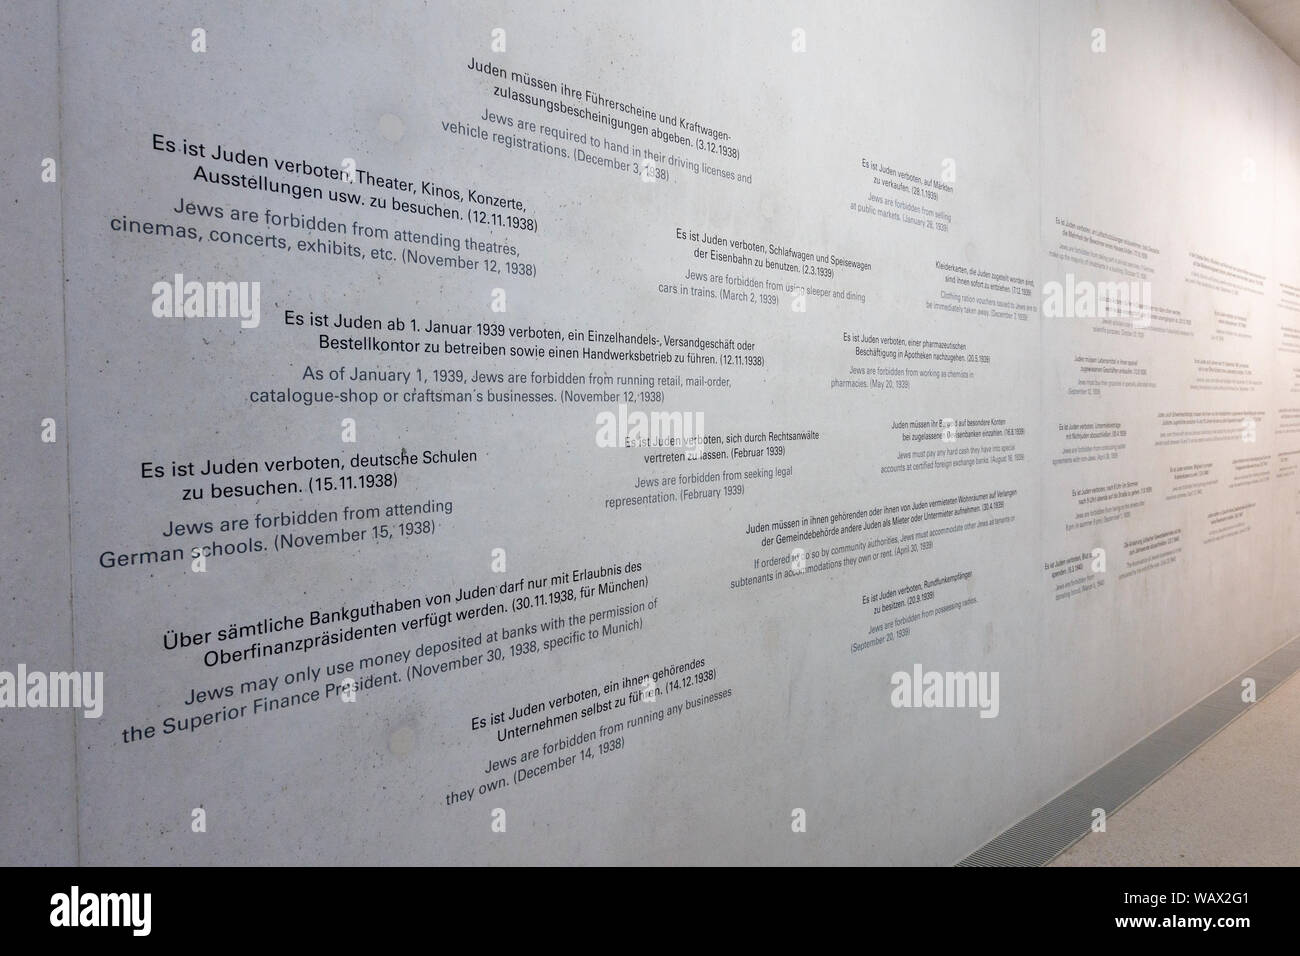 Display of Nazi anti-Jewish state decrees after November 1938 on a wall in the NS-Dokumentationszentrum München, Munich, Germany. Stock Photo